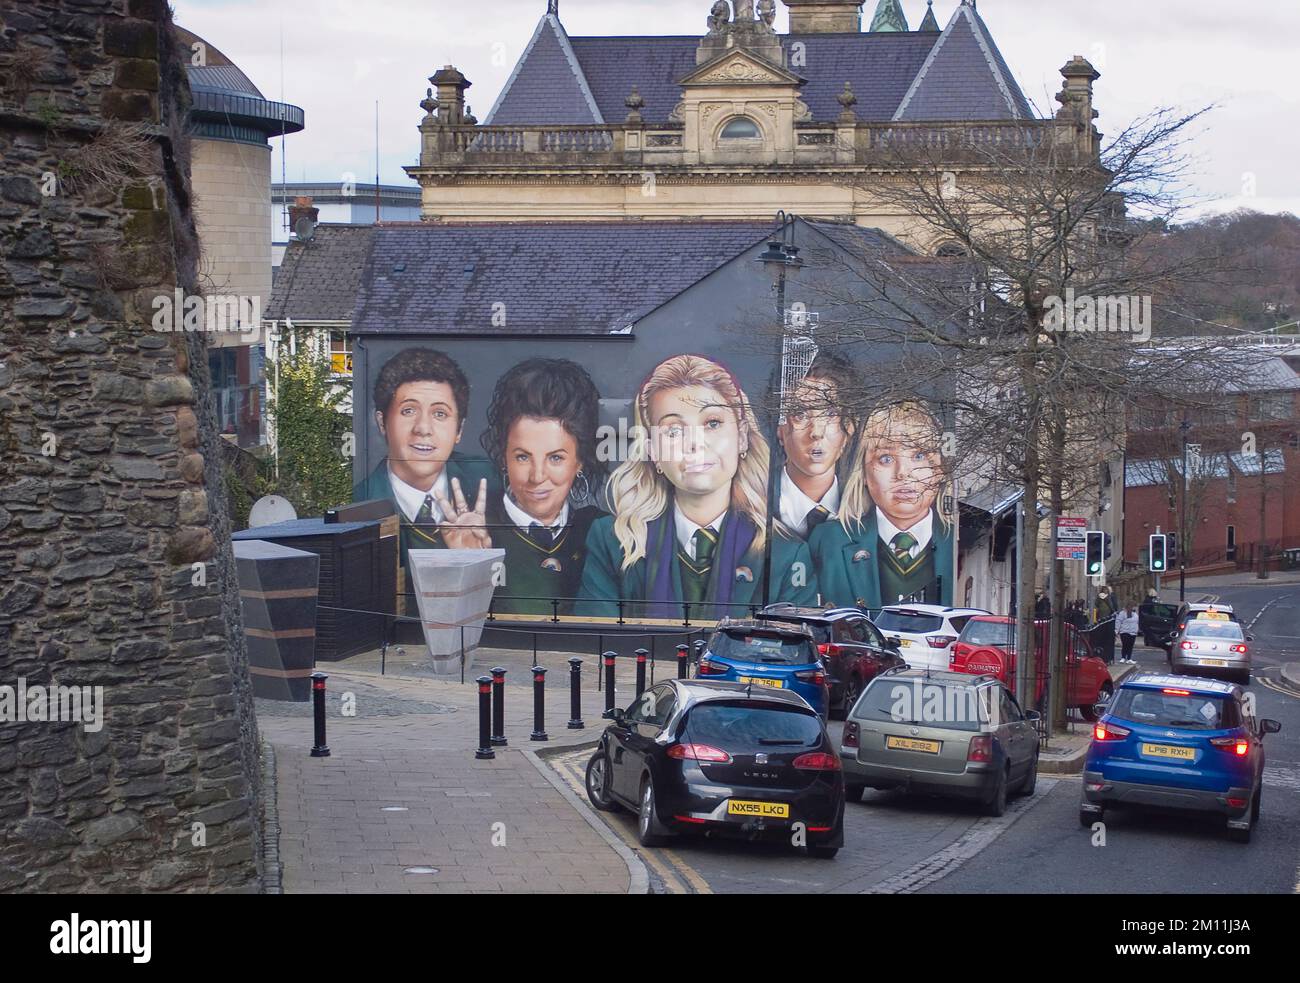 Irlande, Nord, Derry City, Derry Girls Mural dans Orchard Street. Banque D'Images